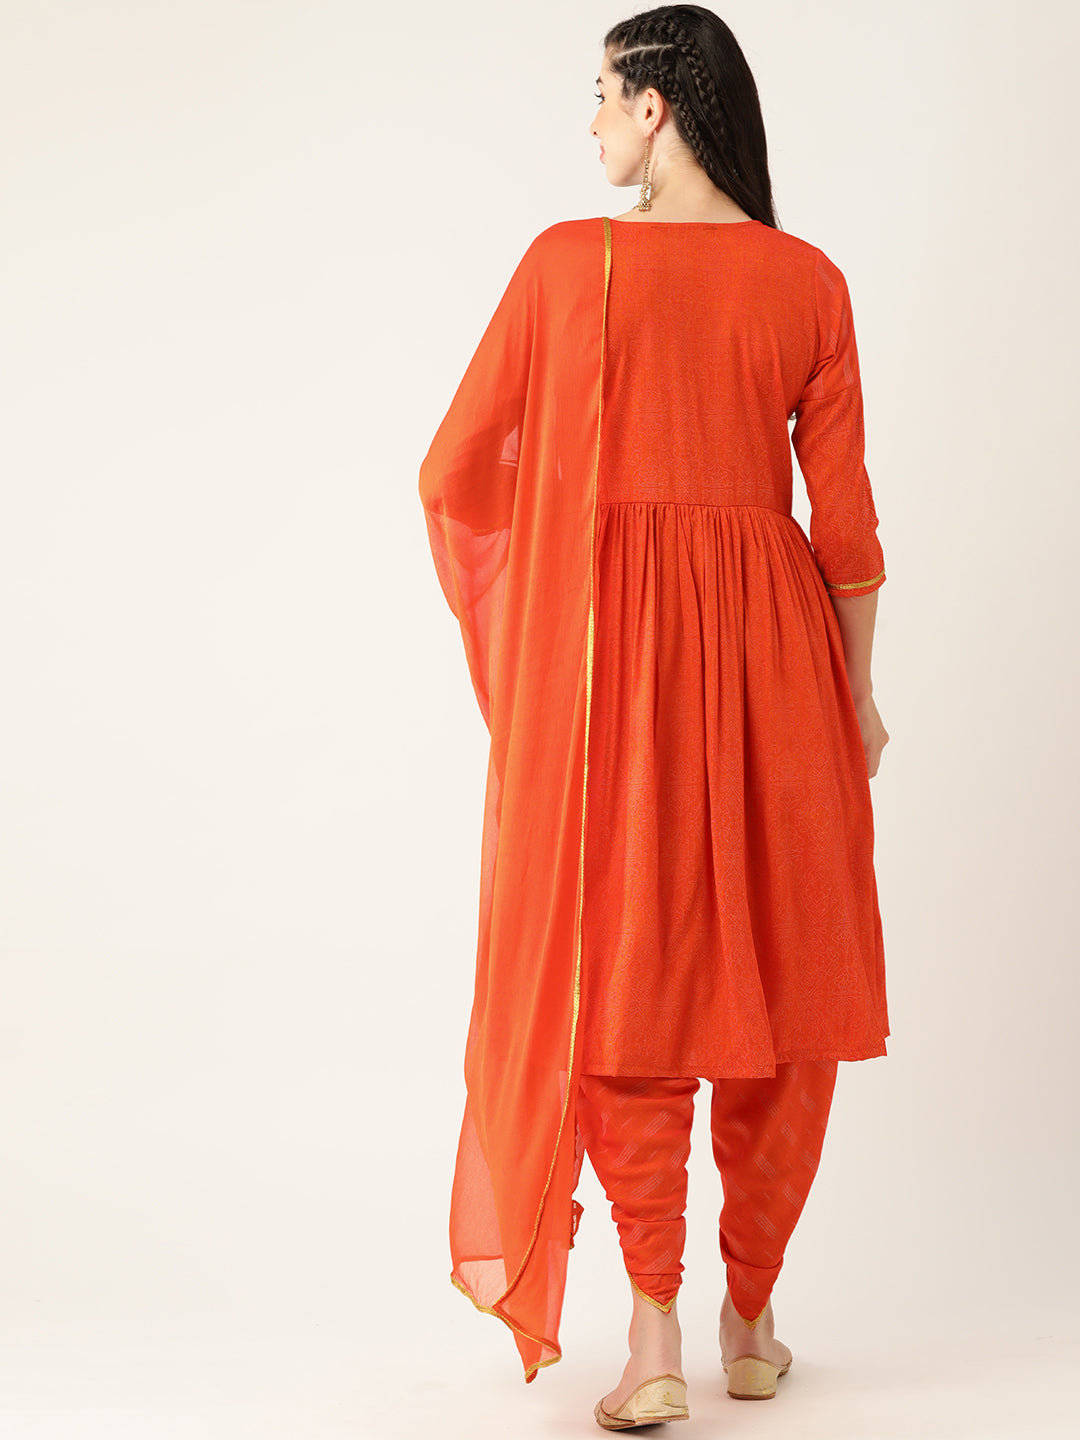 Women's Orange Color Rayon Blend Printed Kurta Dhoti With Dupatta - VAABA